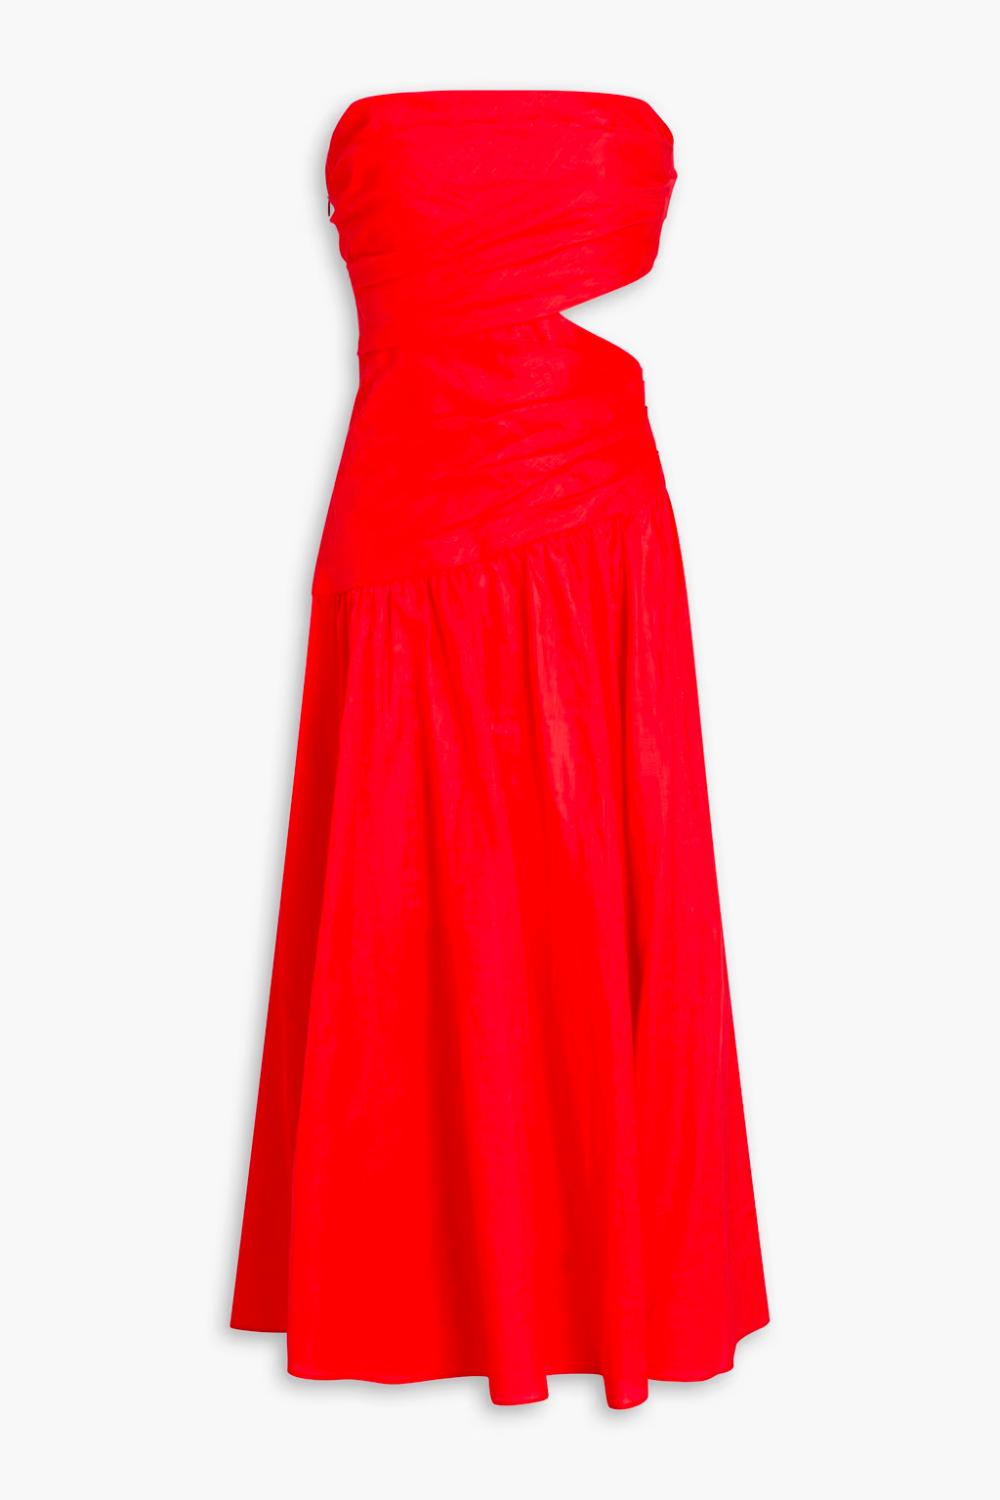 Zimmermann-Red-Dress